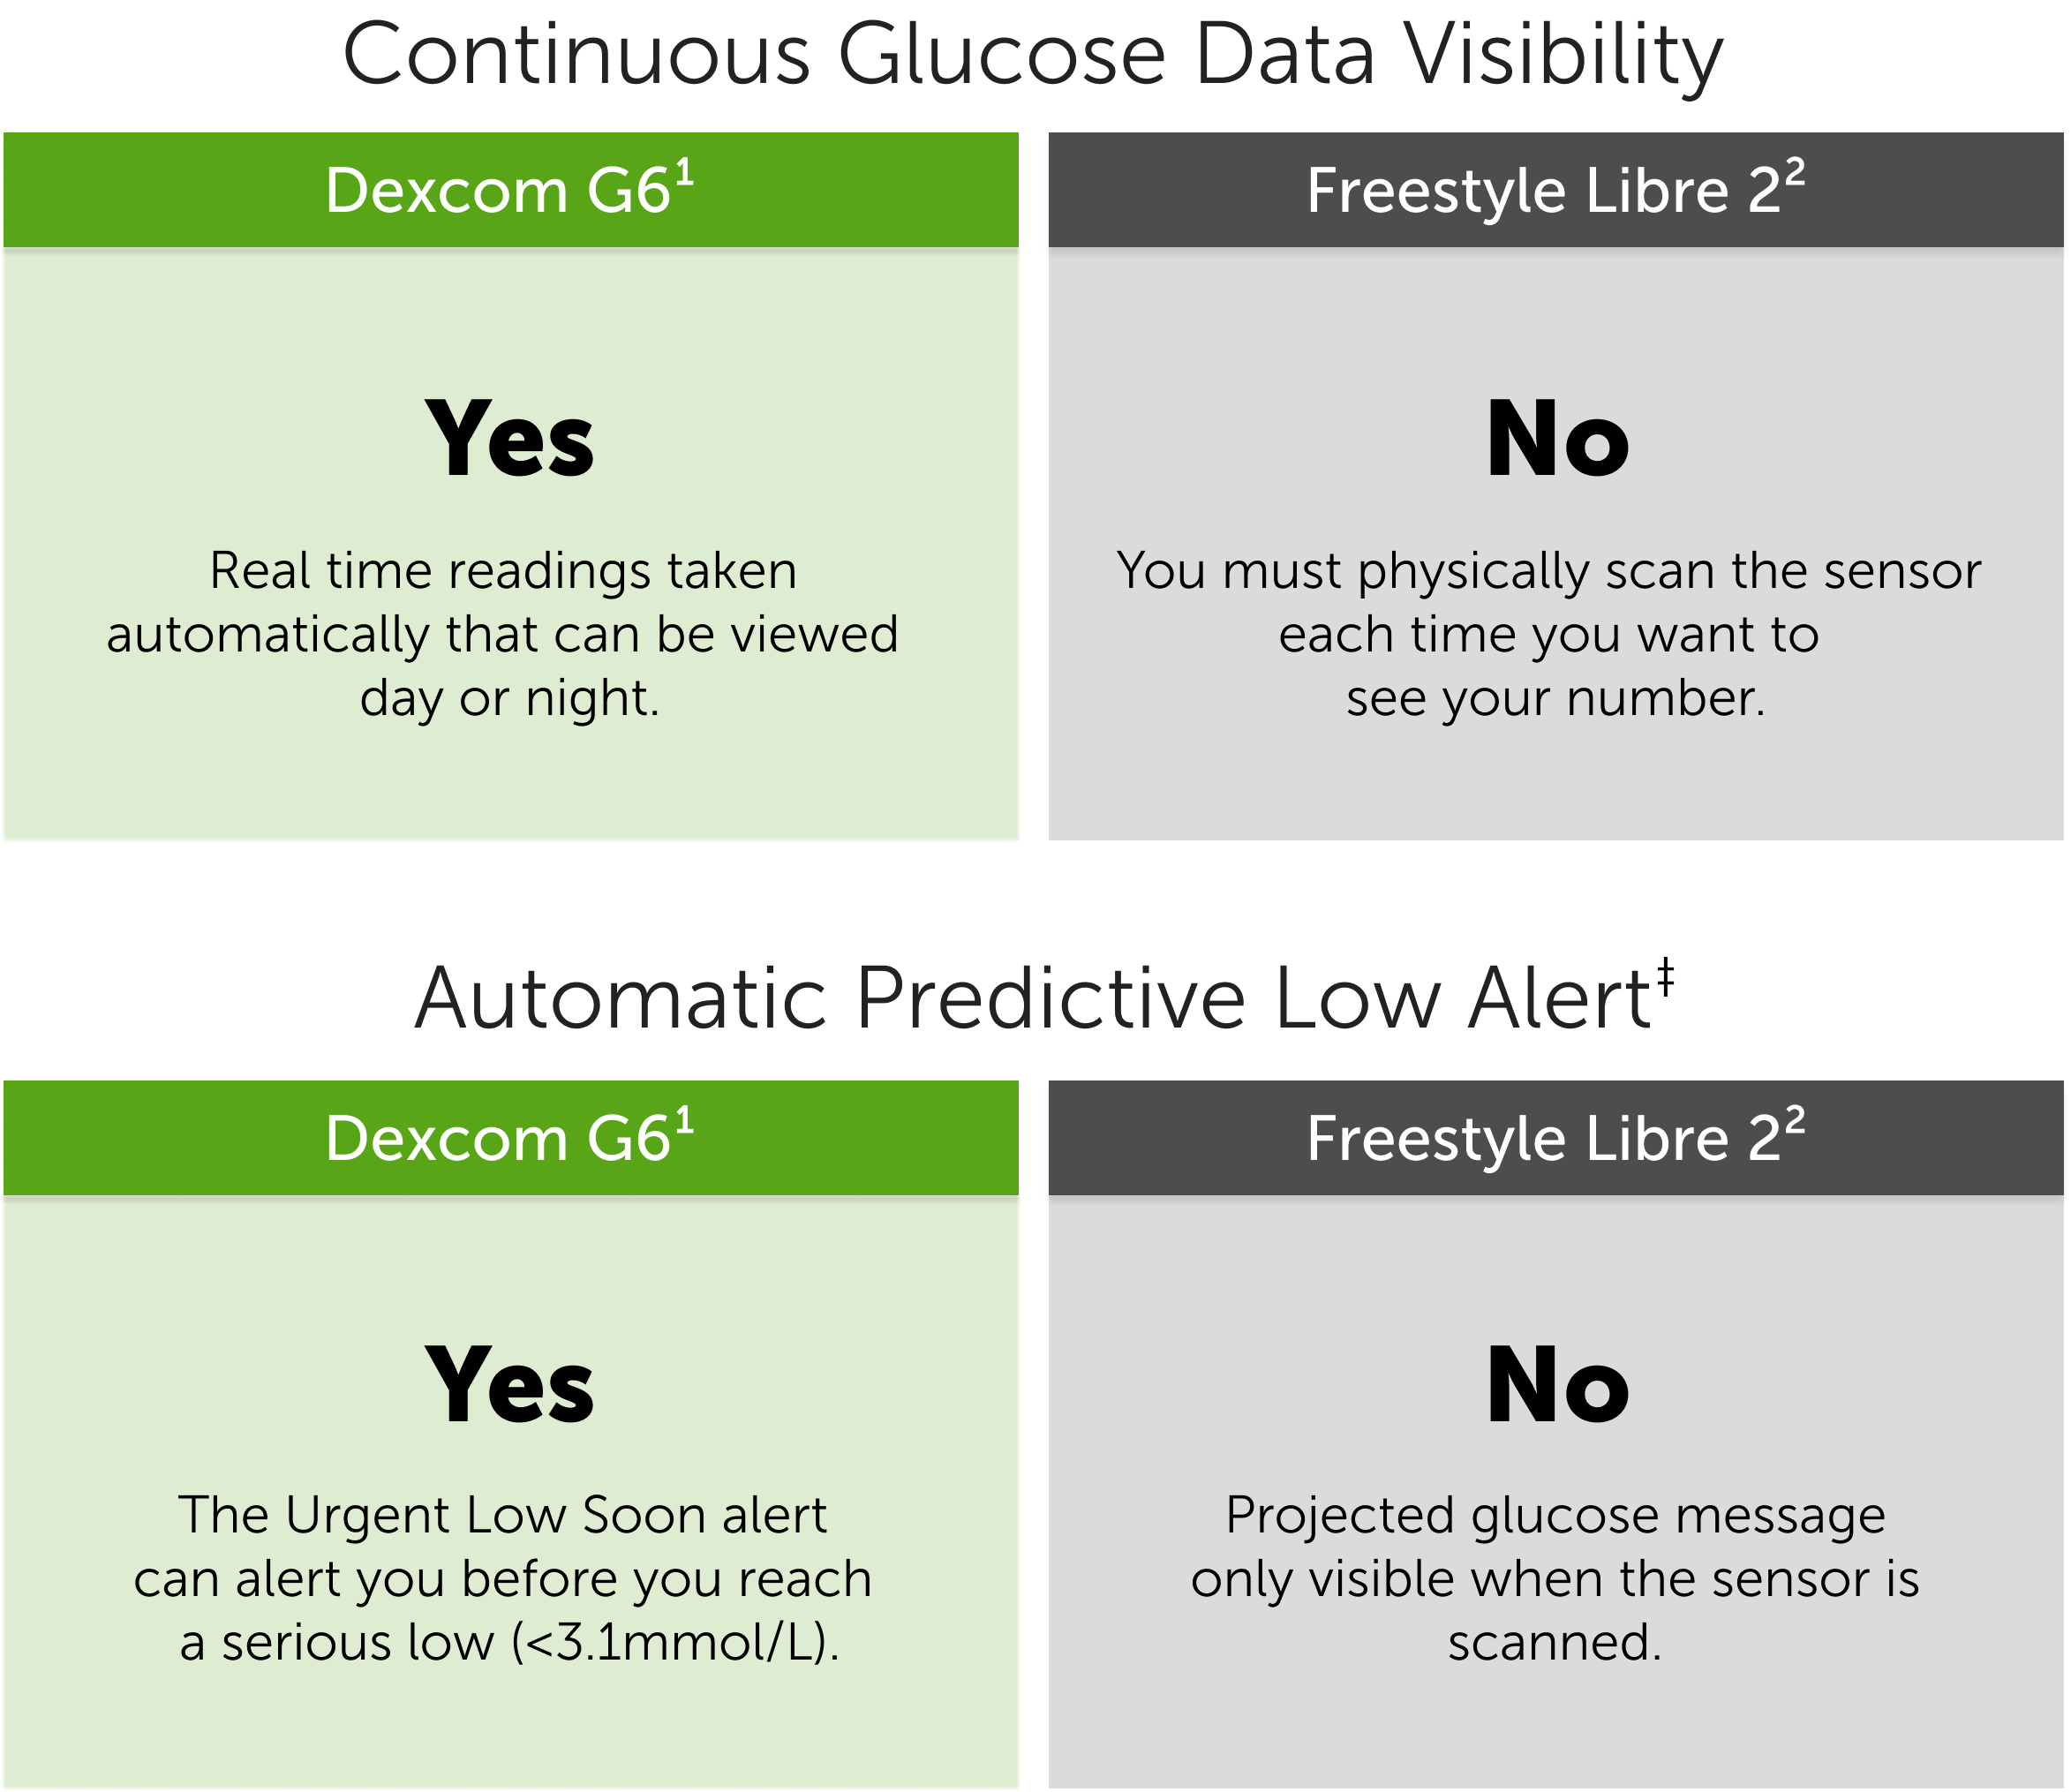 FreeStyle Libre vs. Dexcom G6 continuous glucose data visibility and alerts